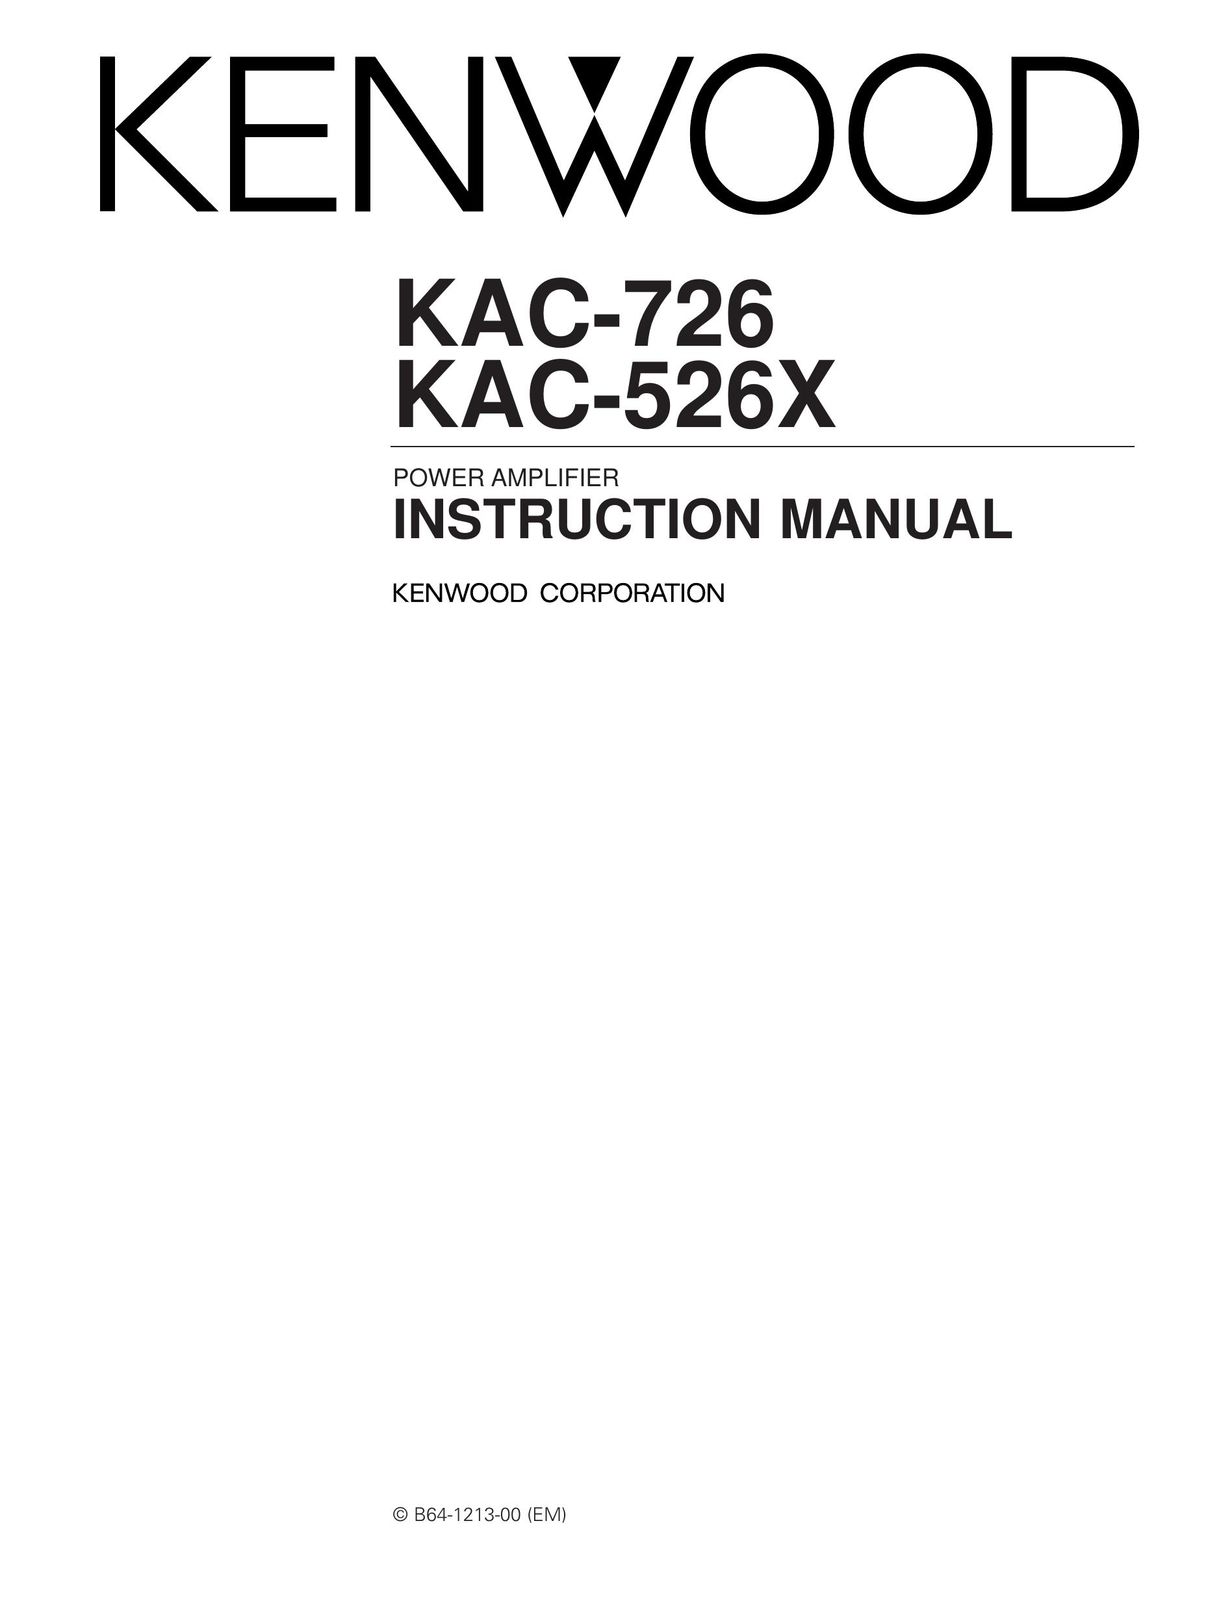 Kenwood 526 Stereo Amplifier User Manual